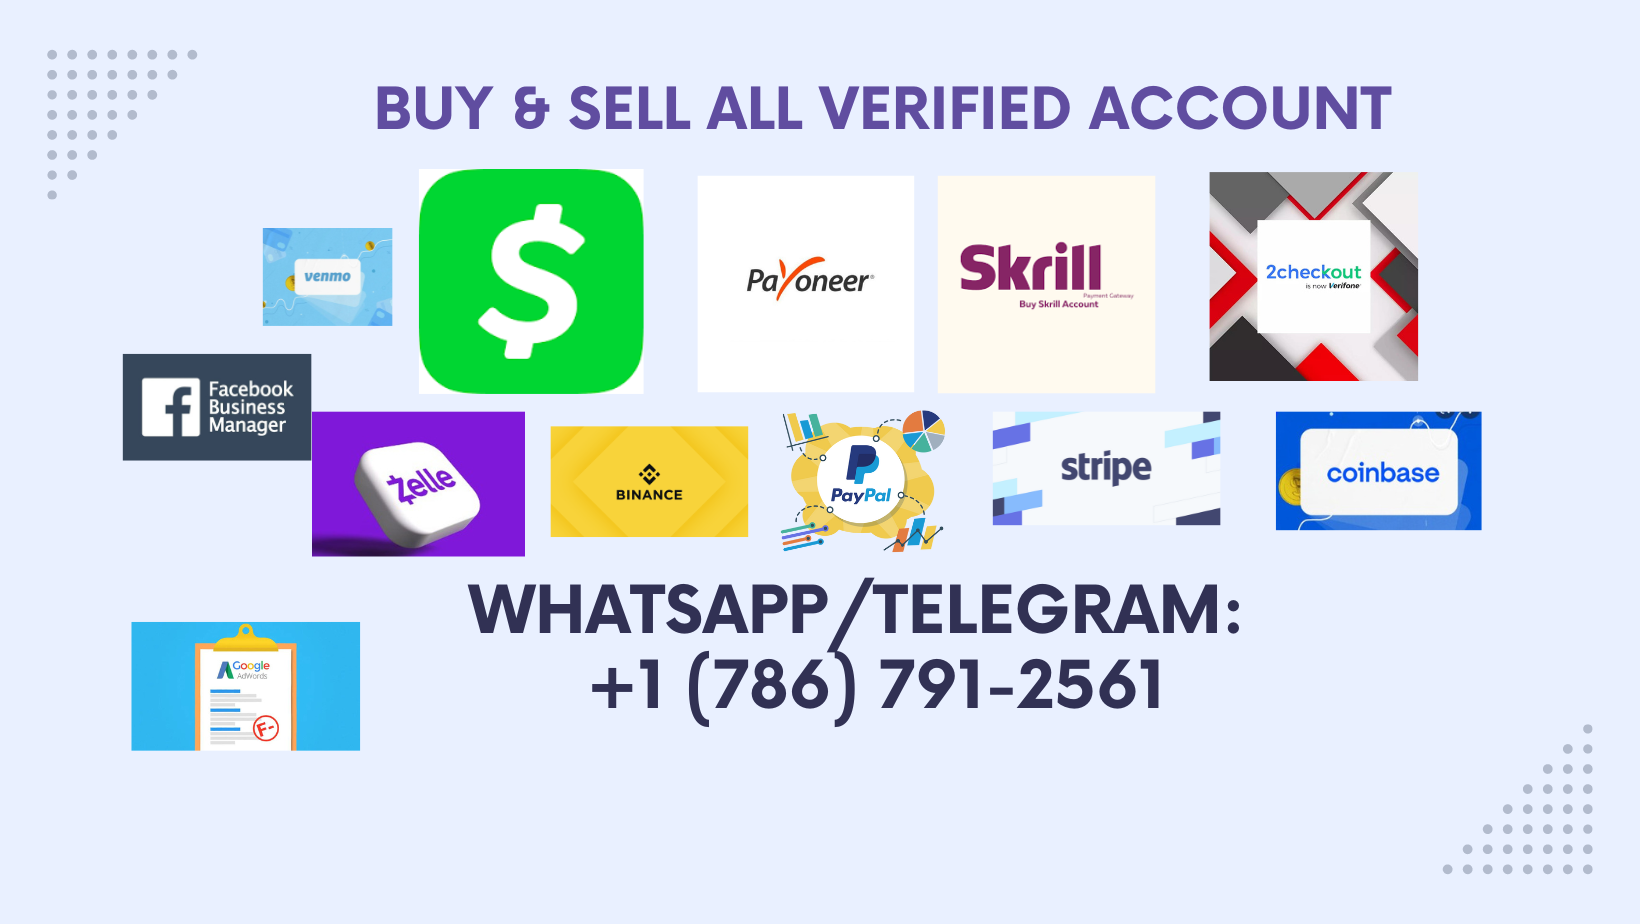 Buy verified all accounts